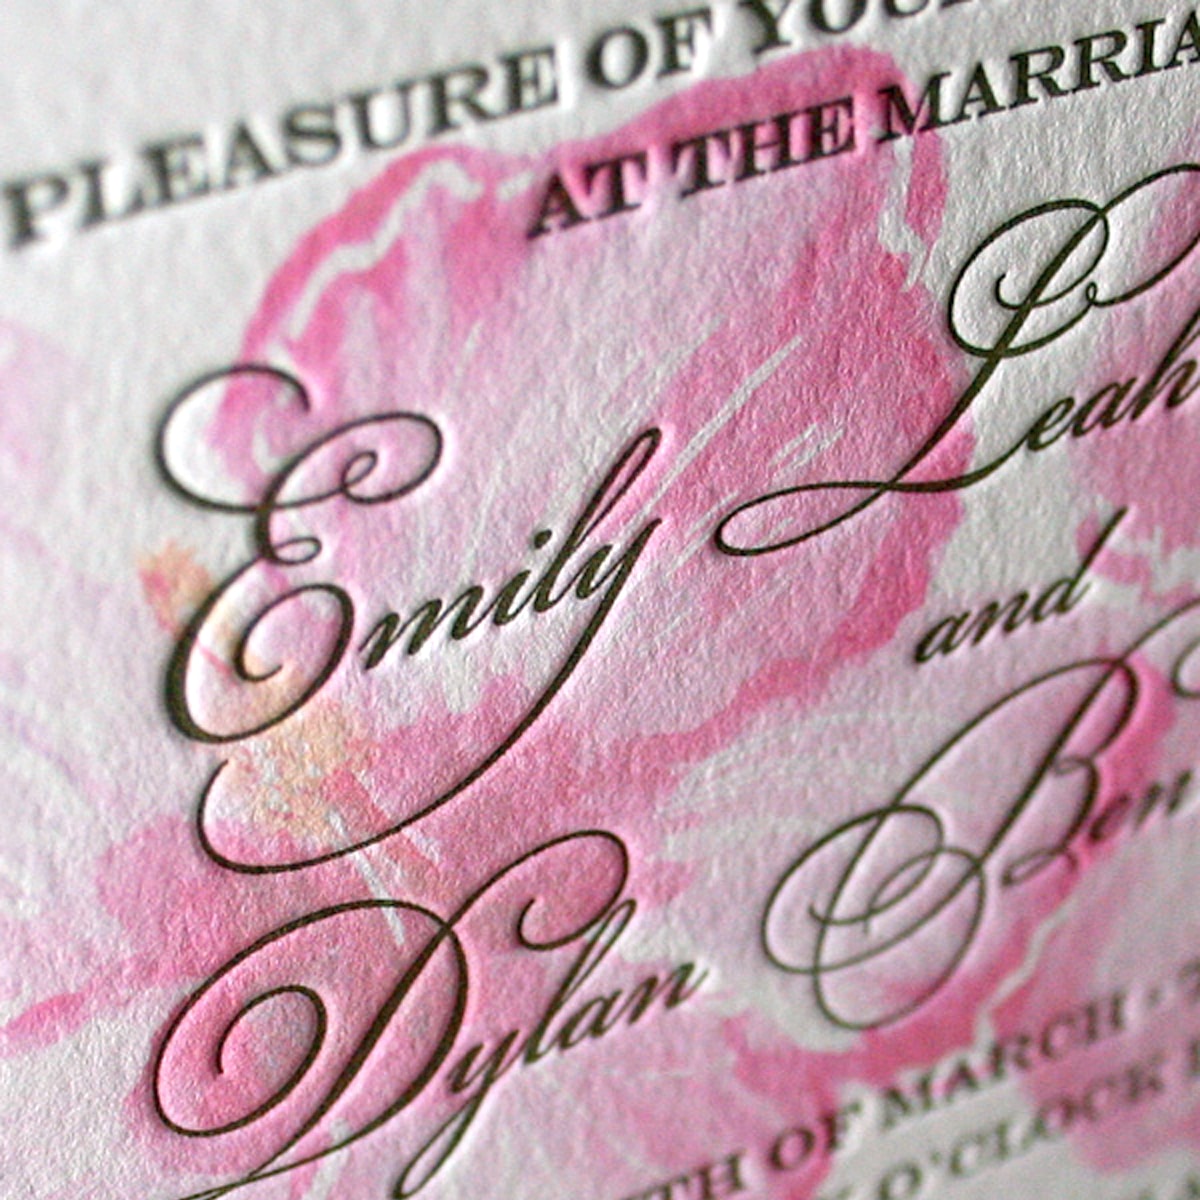 Custom wedding invitaitons with watercolor flower and letterpress printing. www.mospensstudio.com